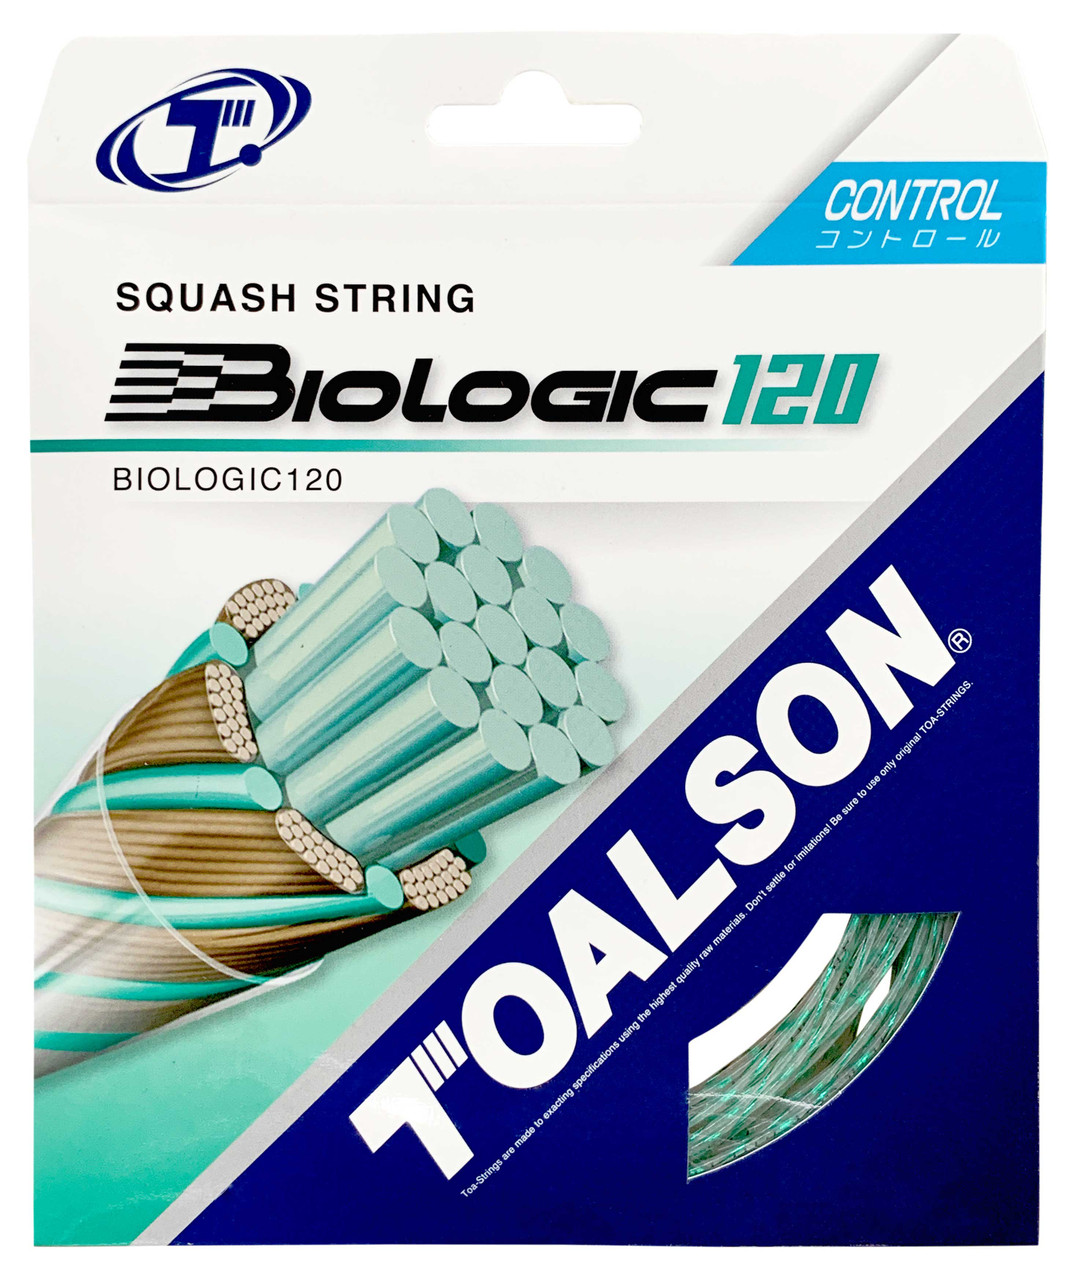 toalson biotech quick replacement tennis grip 